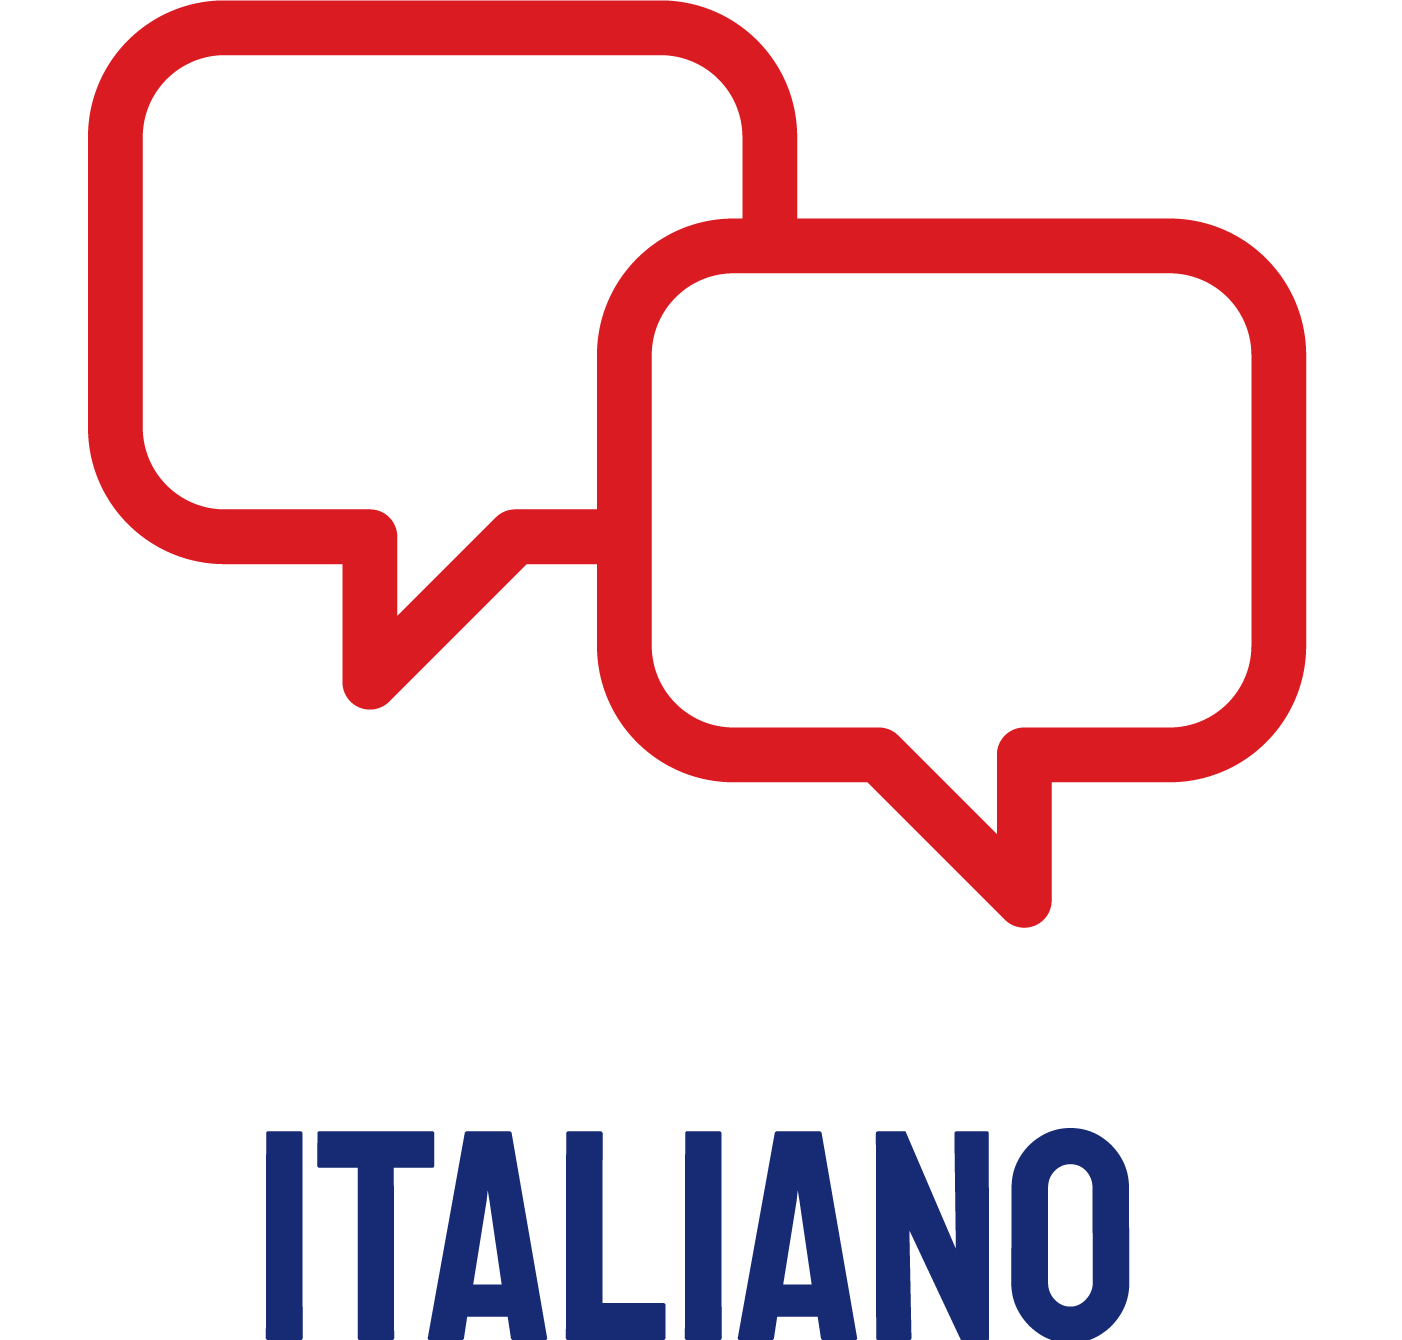 Icones Aulas Extras Italo Site_Italiano